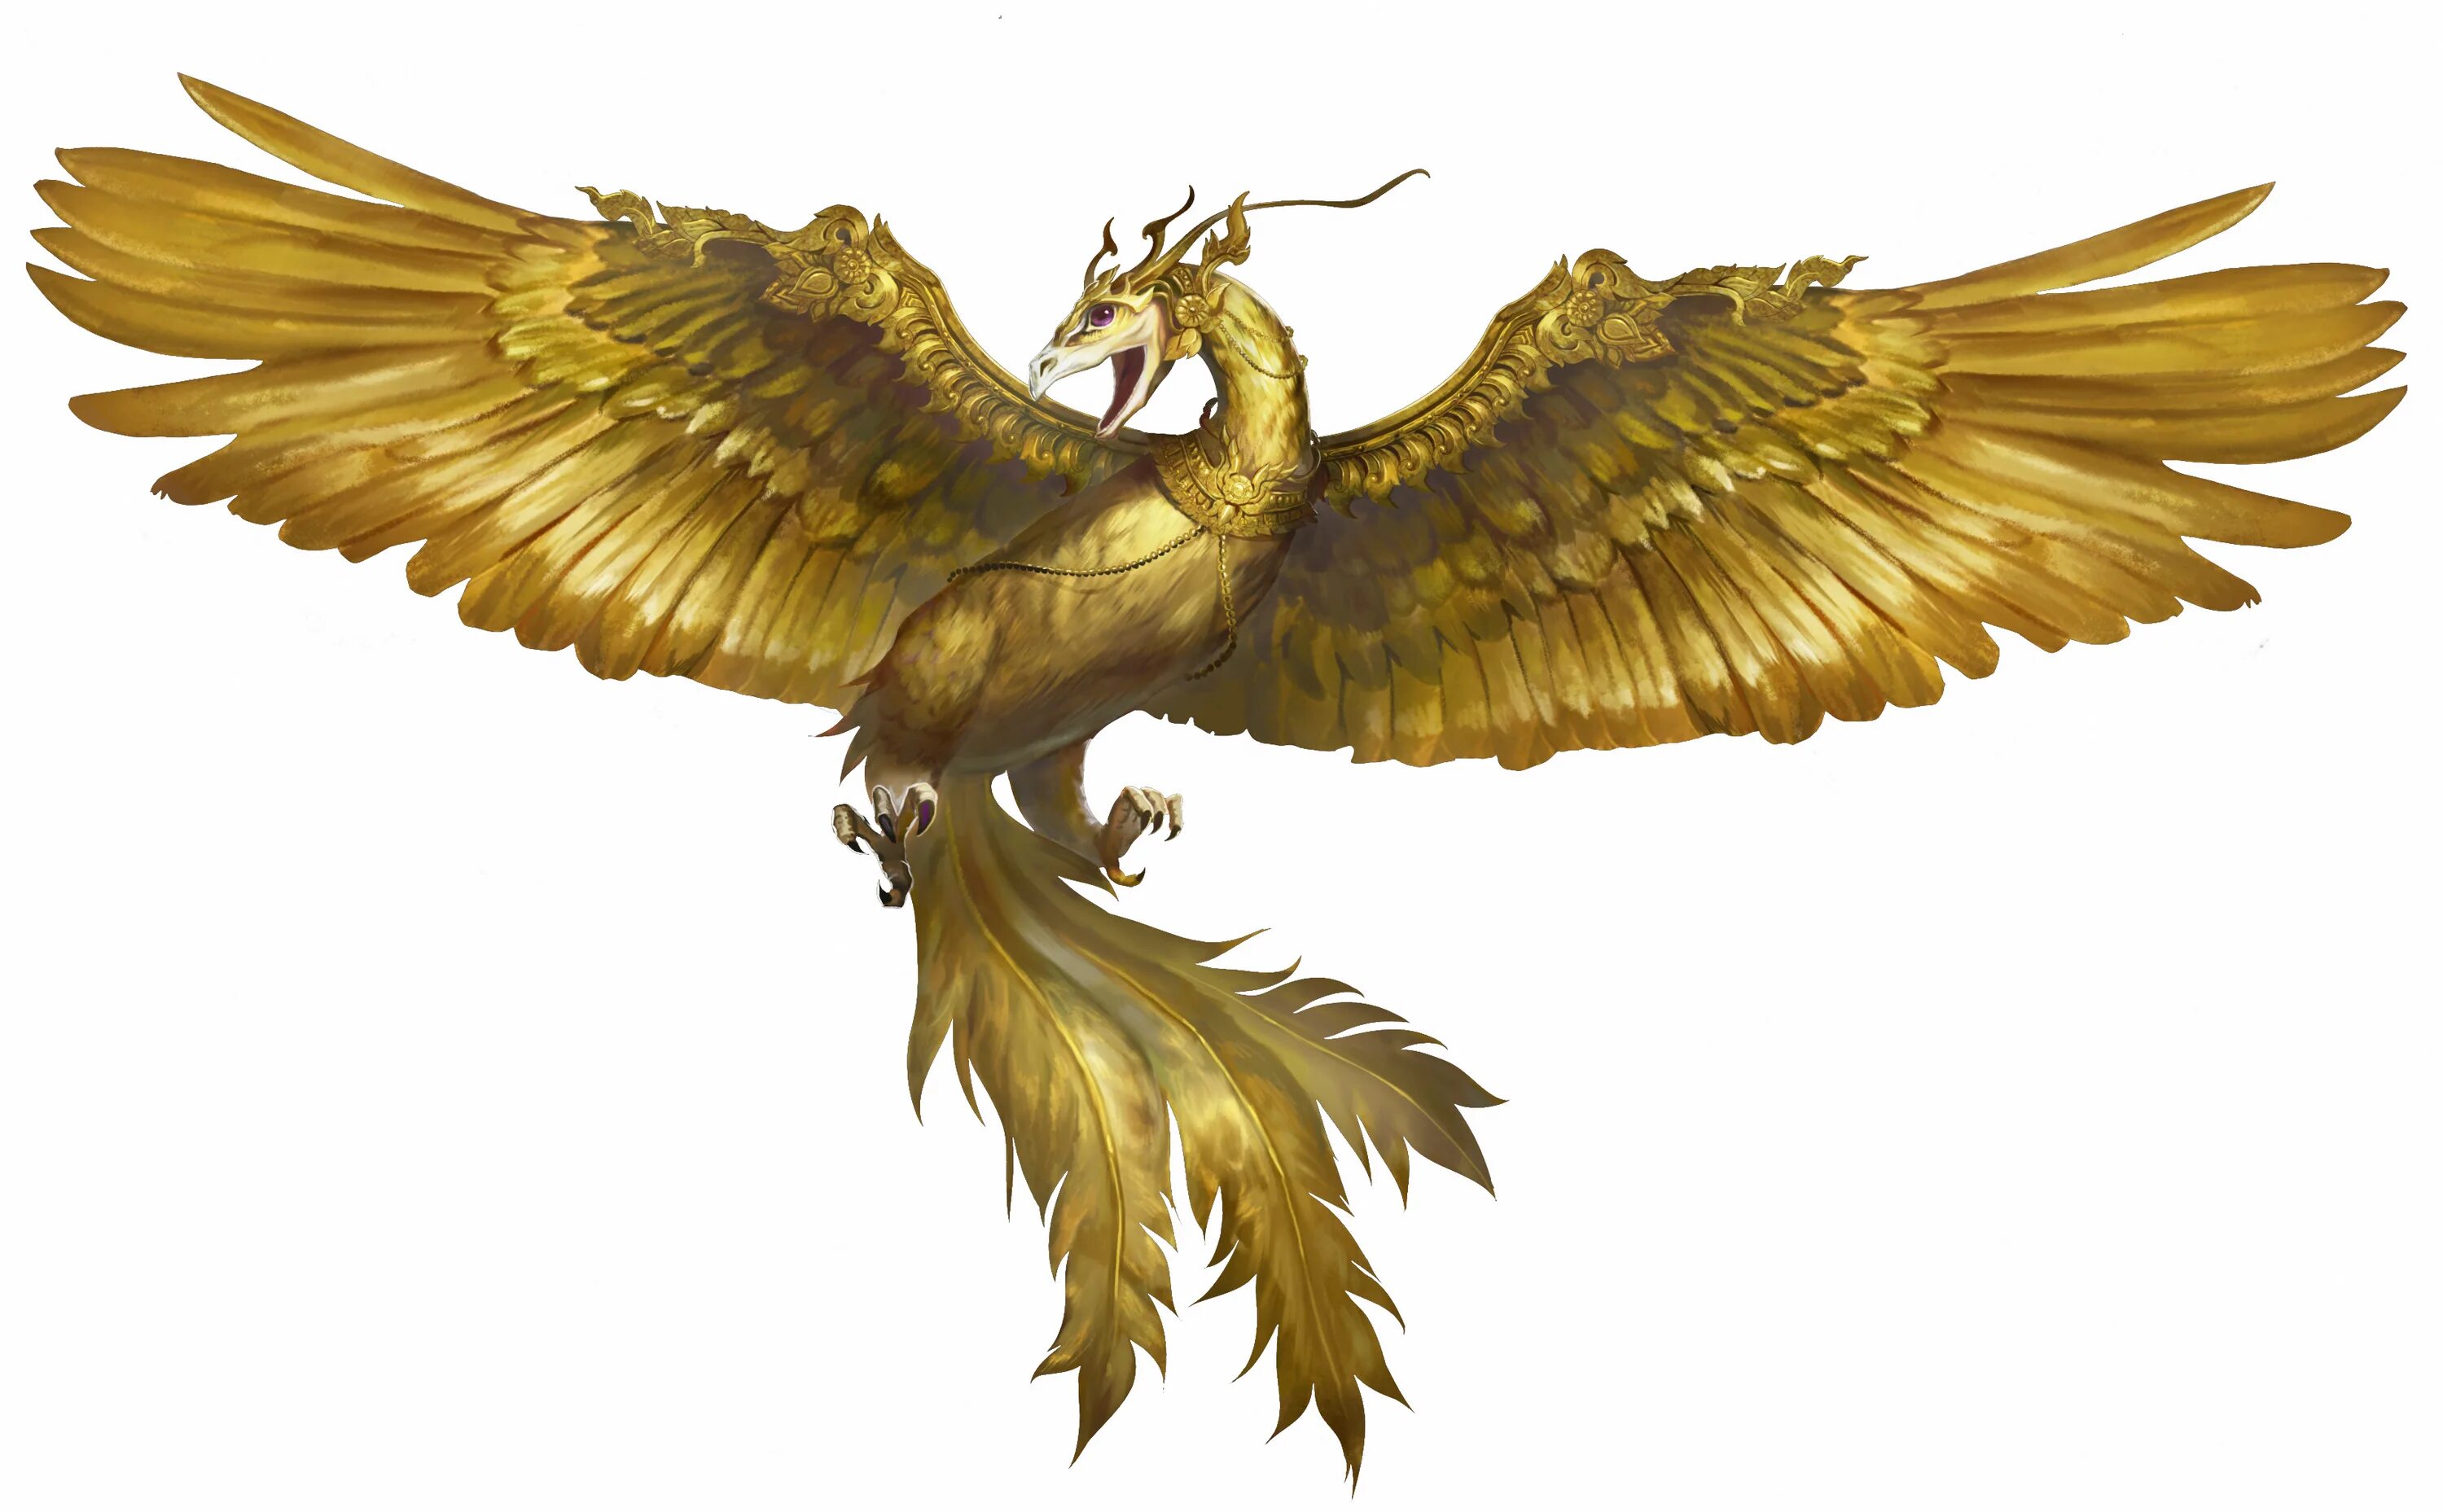 Птица рух. Птица с золотыми крыльями. Золотая птица рух. Птица рух мифология.